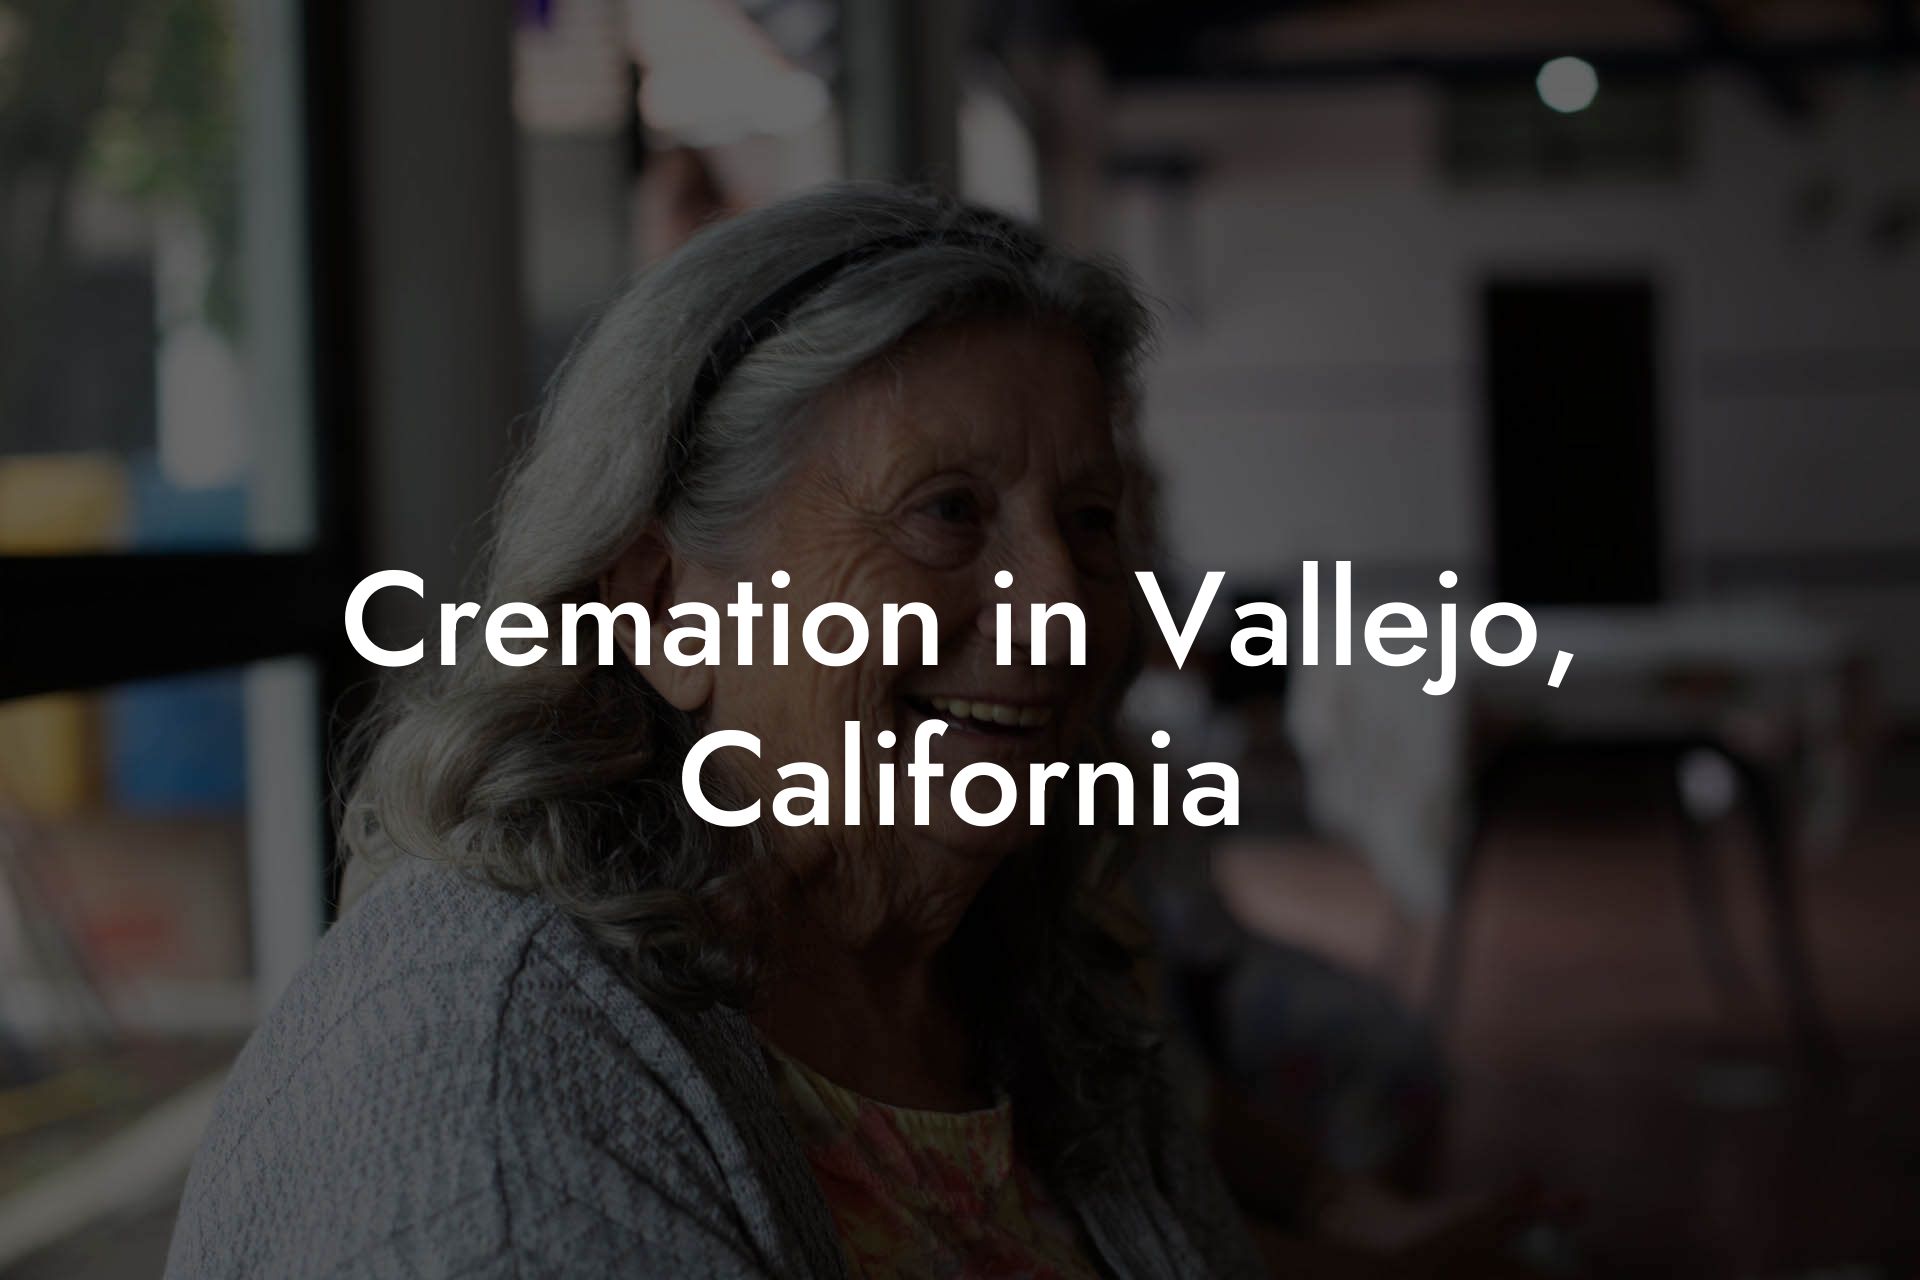 Cremation in Vallejo, California